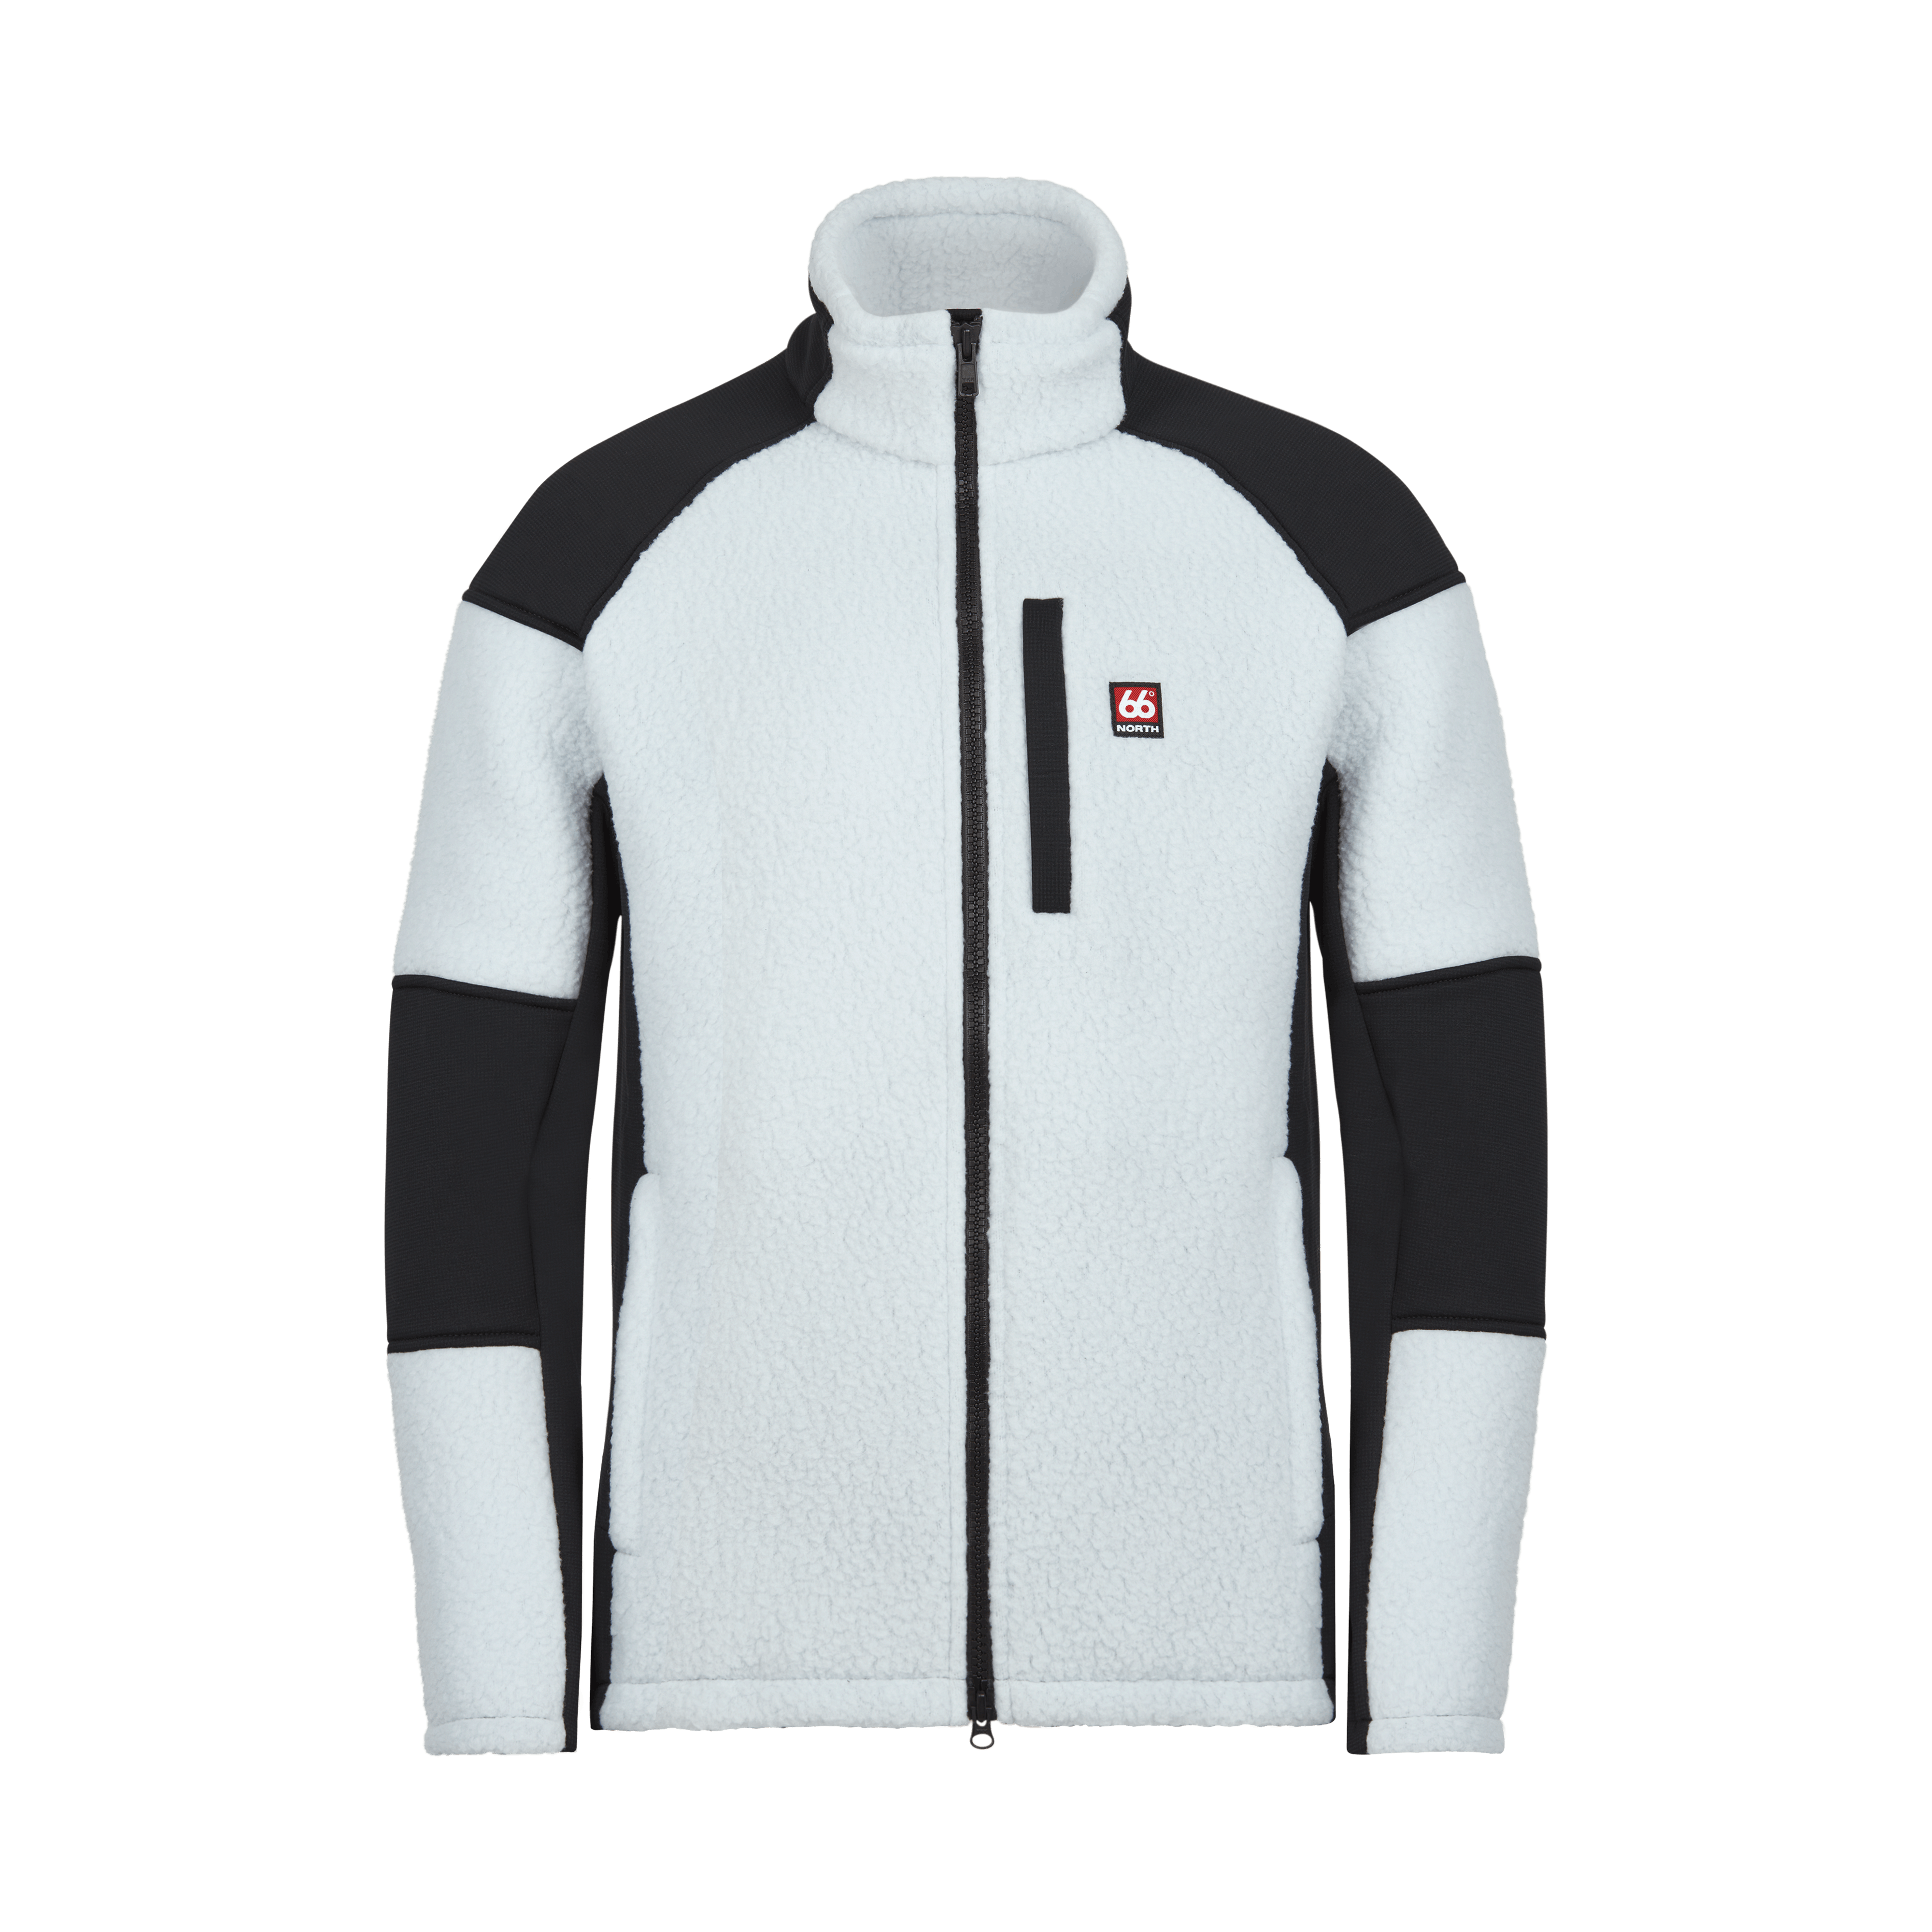 66 North Technical Shearling Tindur Fleece Jacket - Black - L